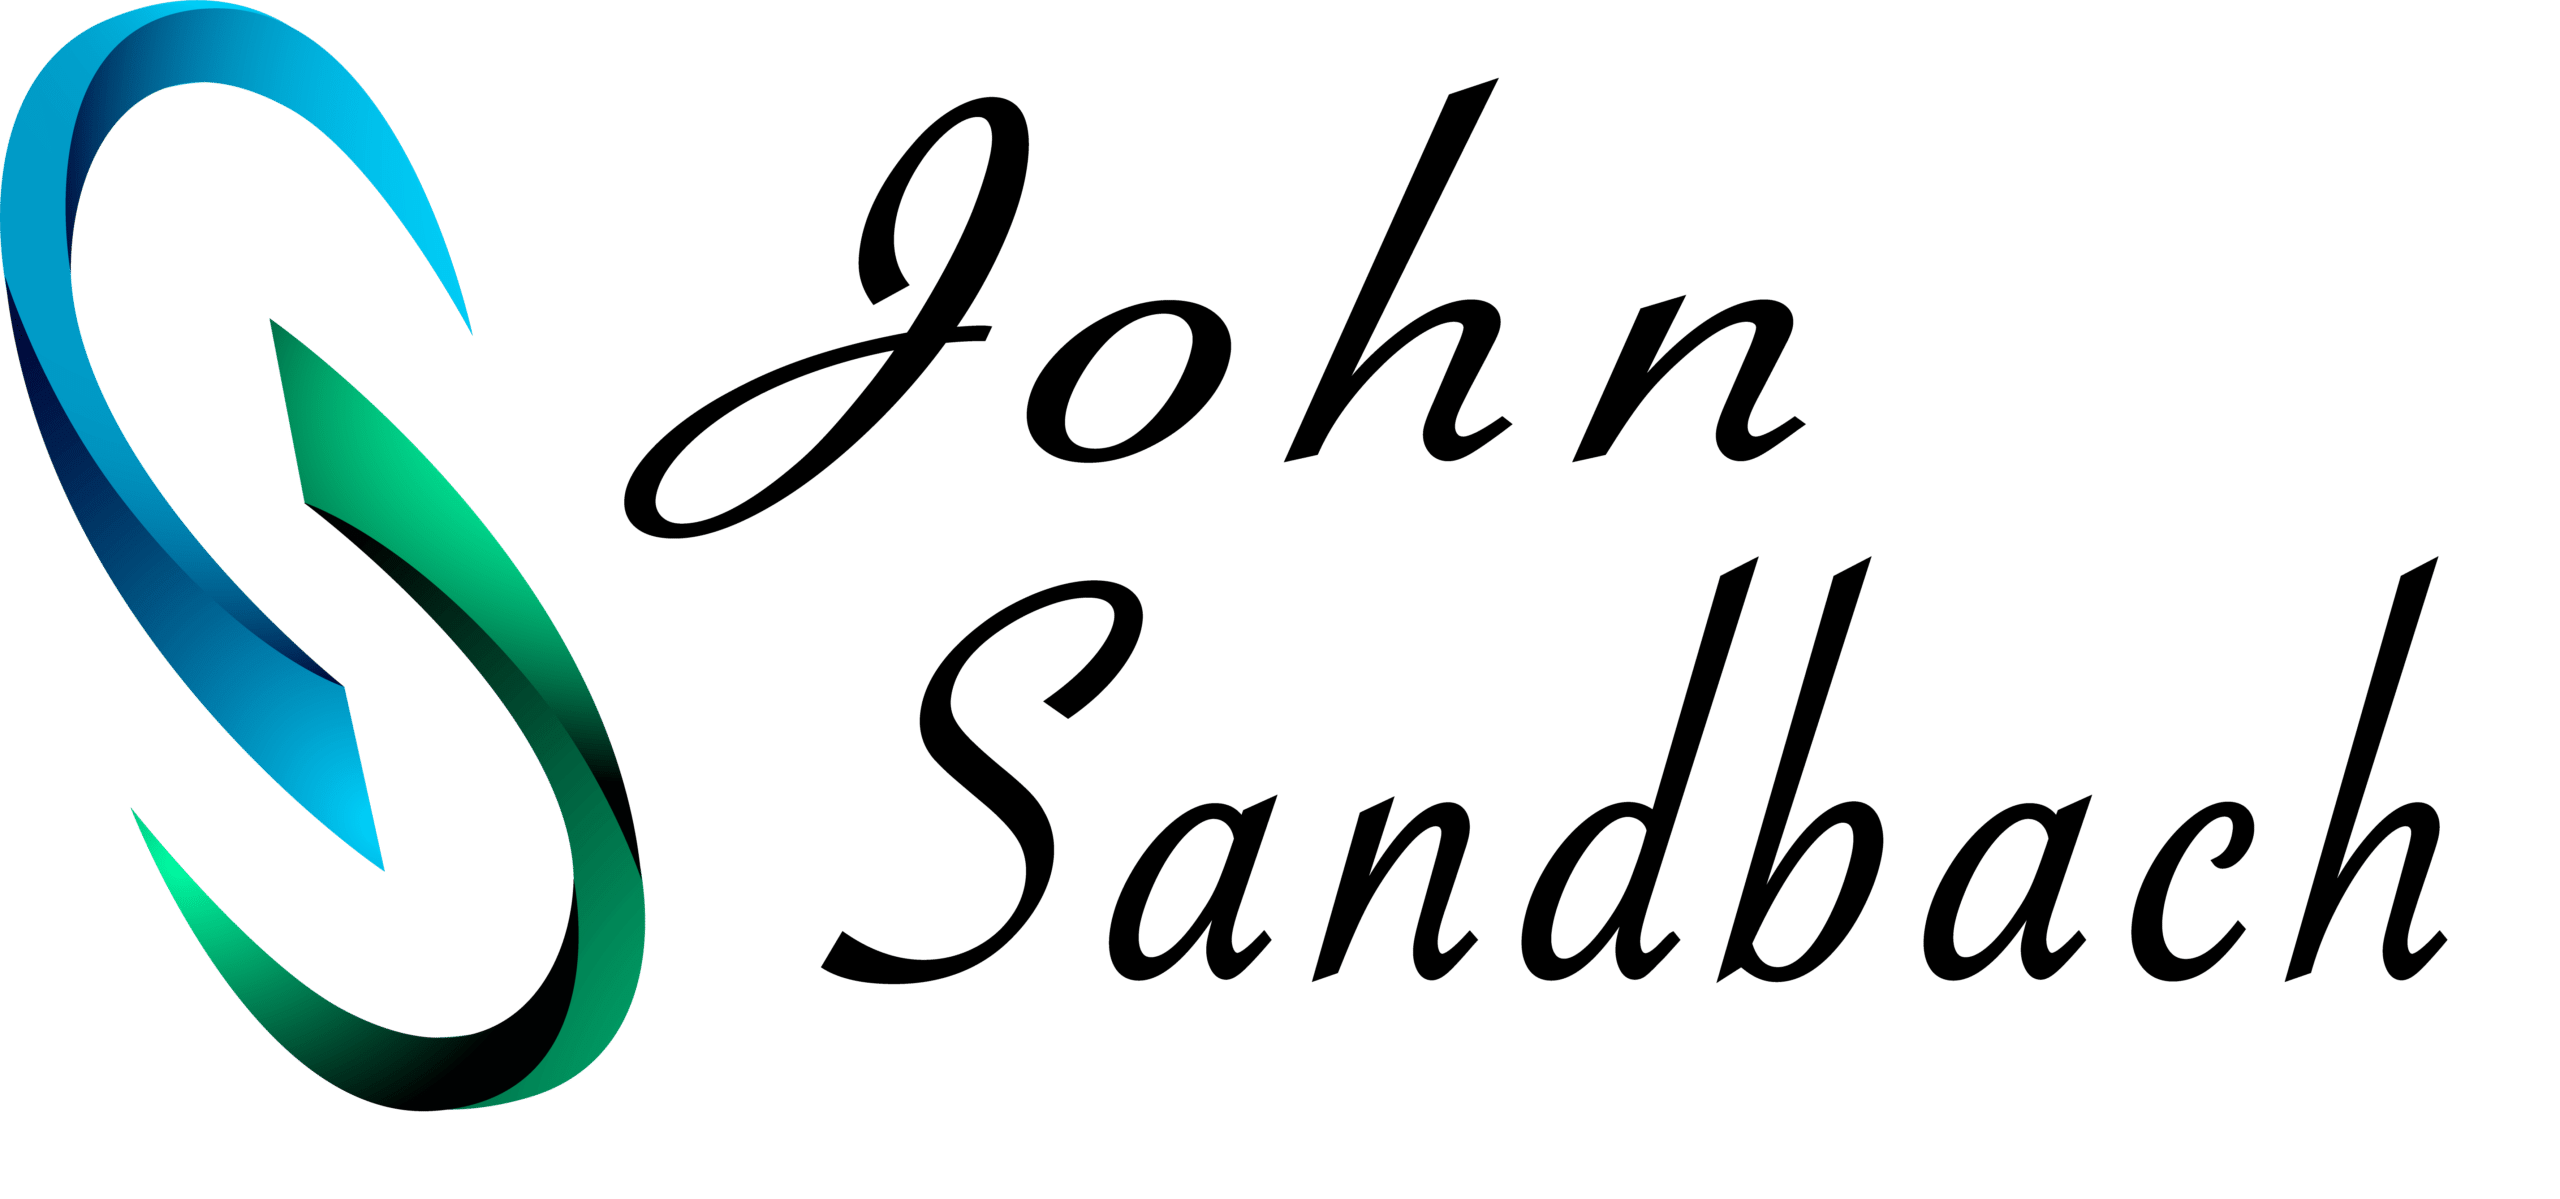 John Sandbach